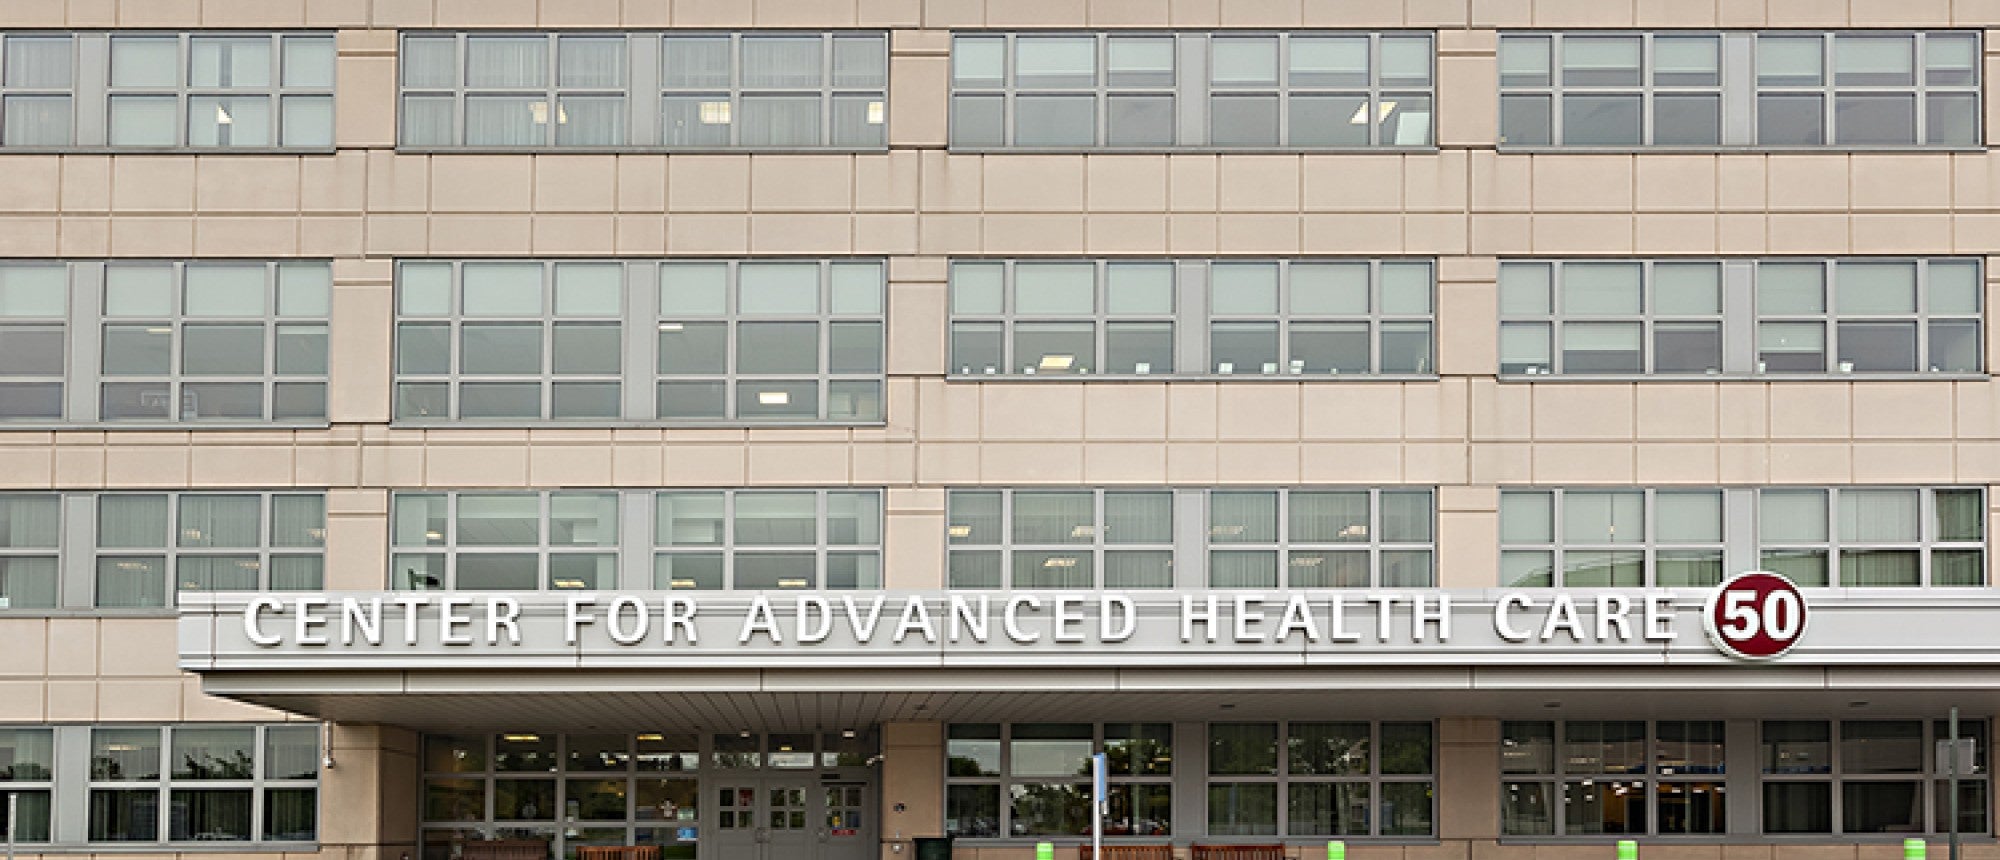 Center for Advanced Health Care